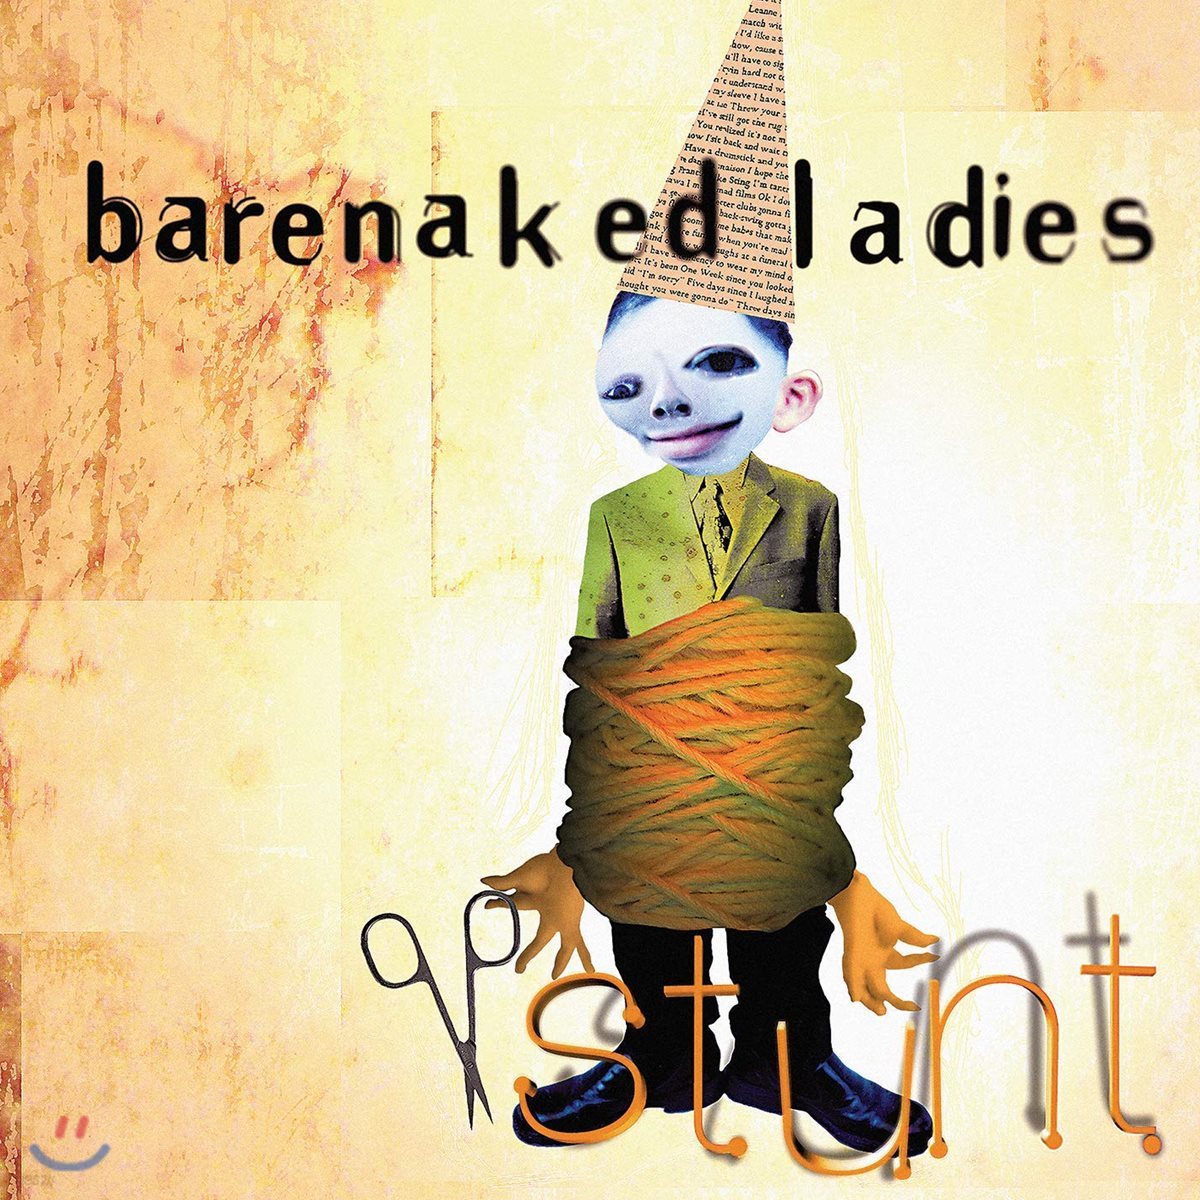 Barenaked Ladies (베어네이키드 레이디스) - Stunt (20th Anniversary Edition)